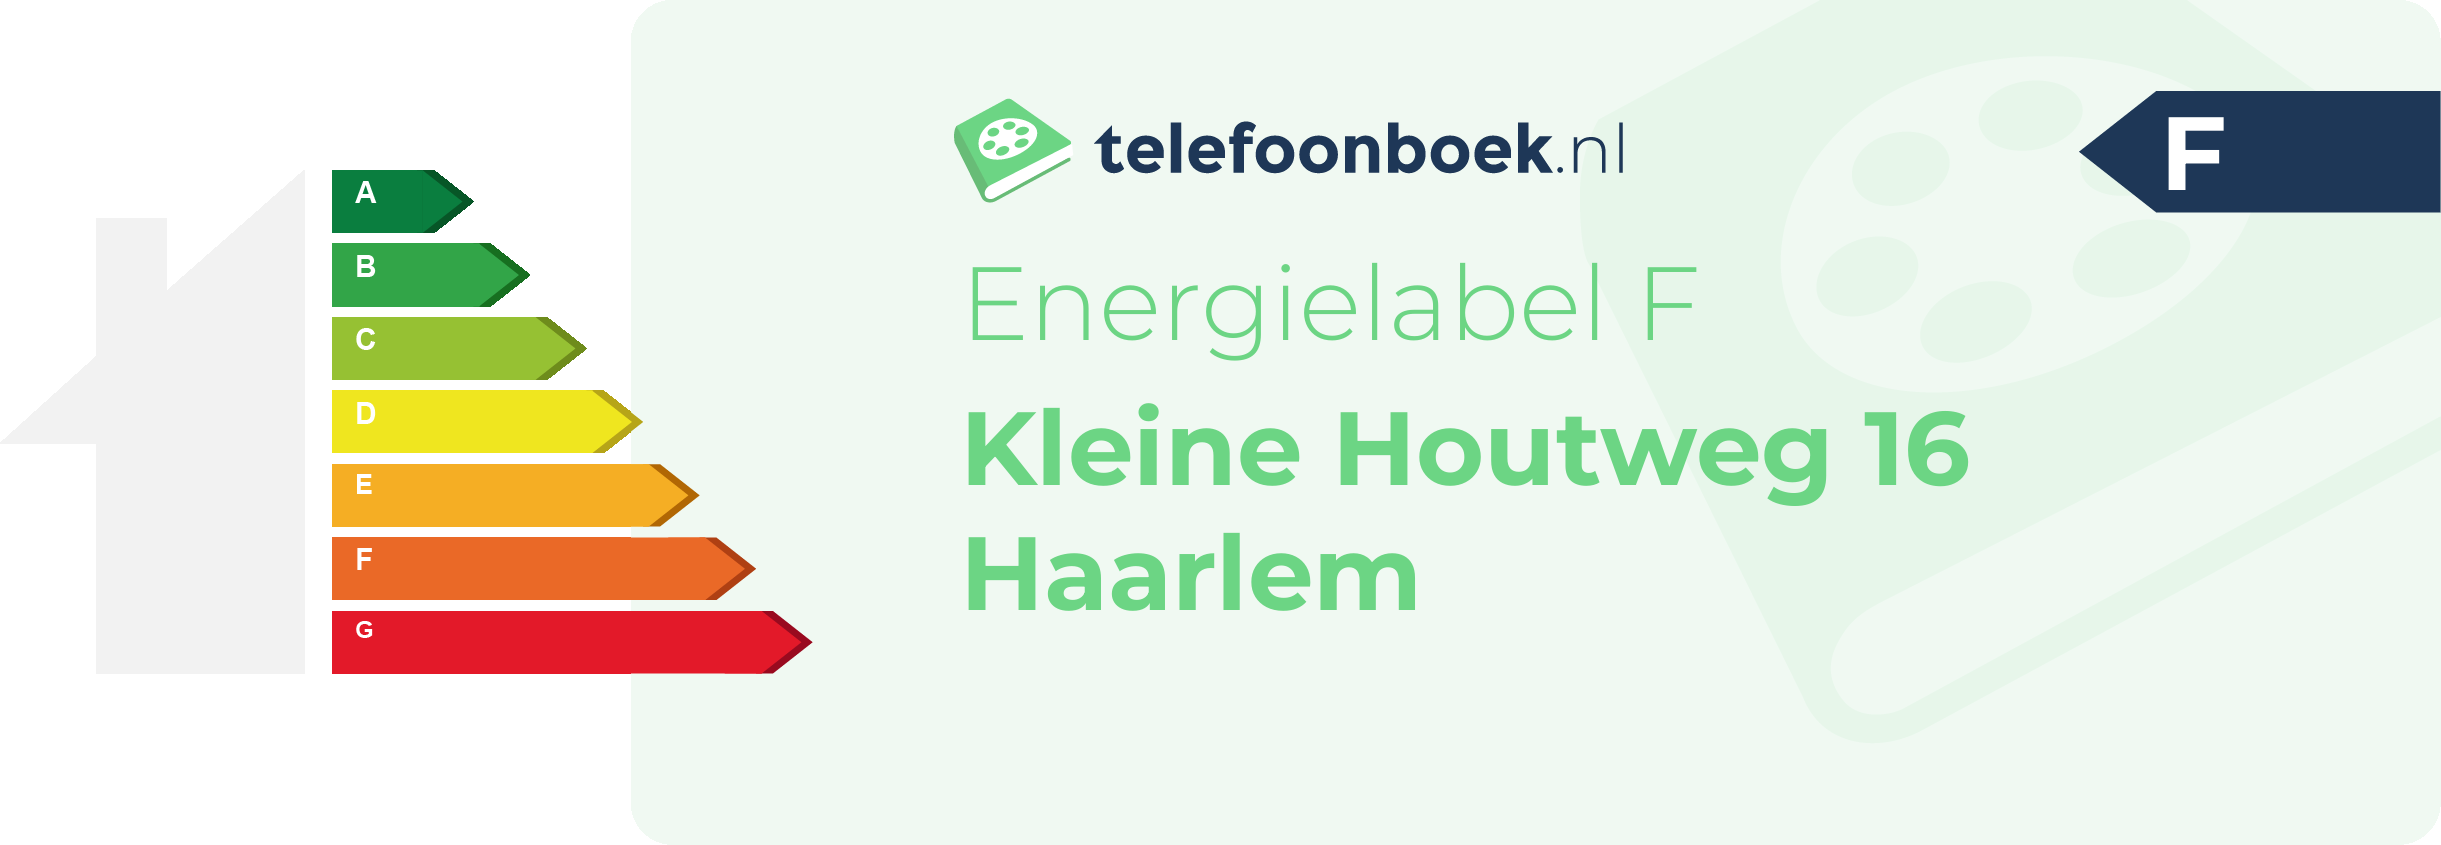 Energielabel Kleine Houtweg 16 Haarlem